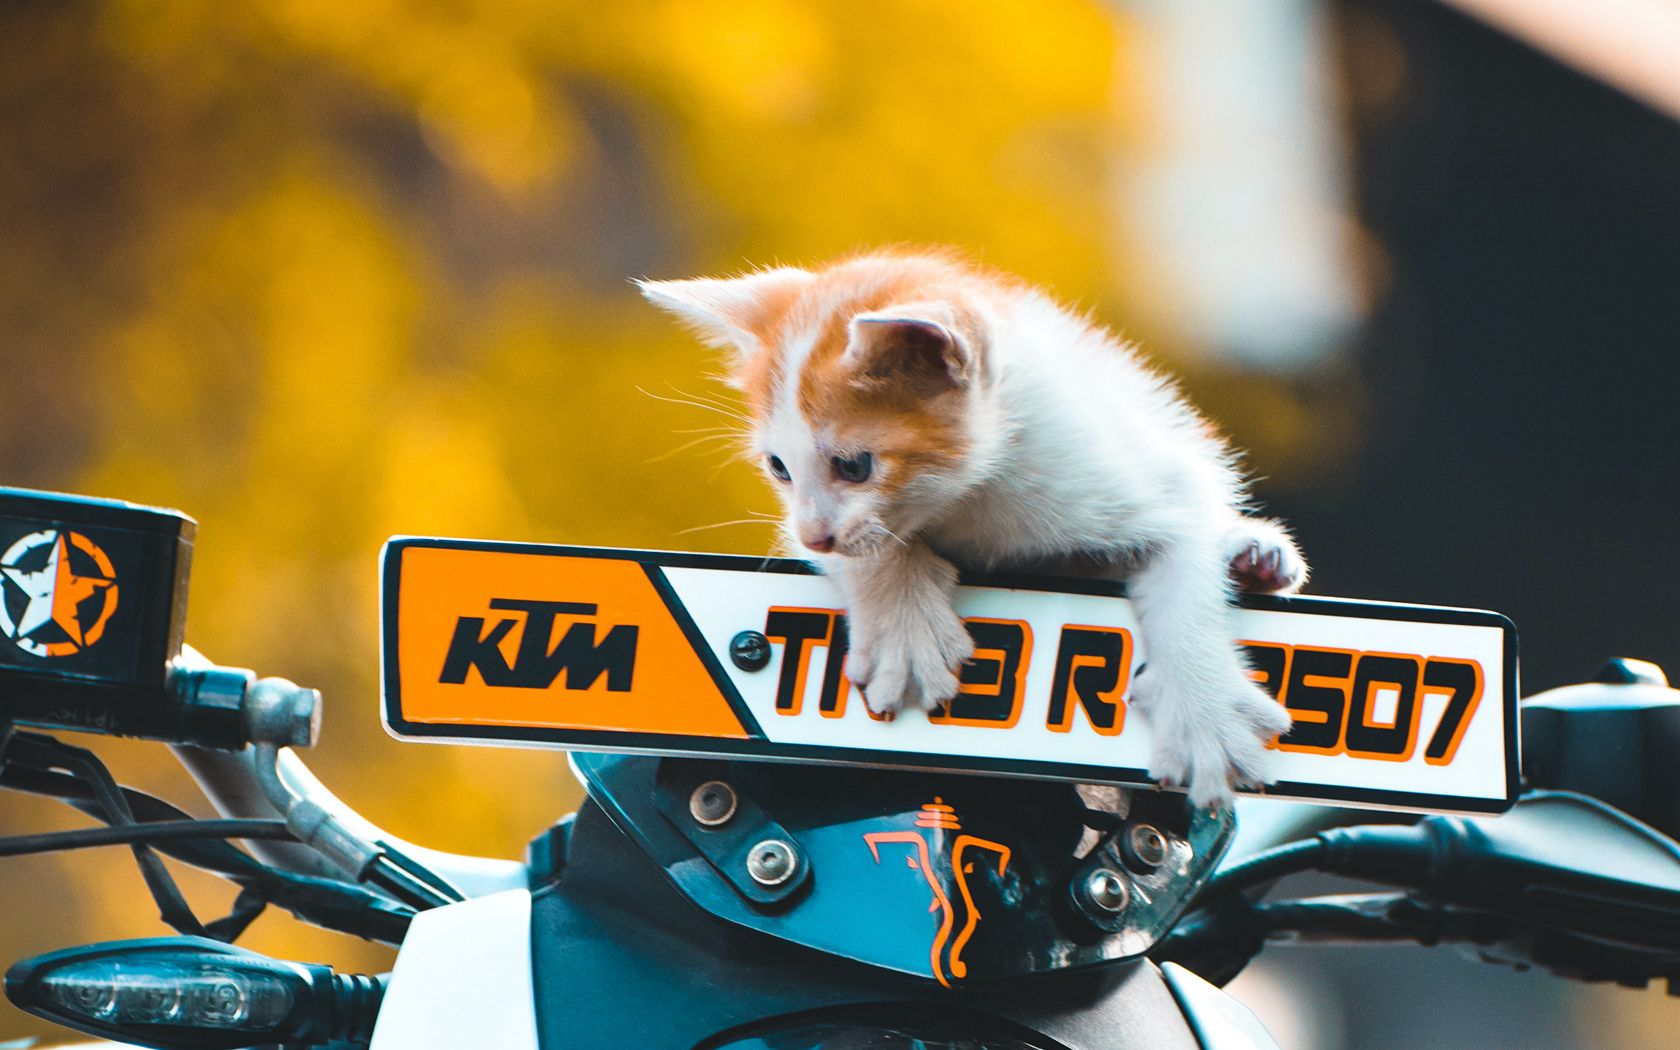 Download wallpaper 1680x1050 kitten, cat, motorcycle, bike, ktm widescreen  16:10 hd background